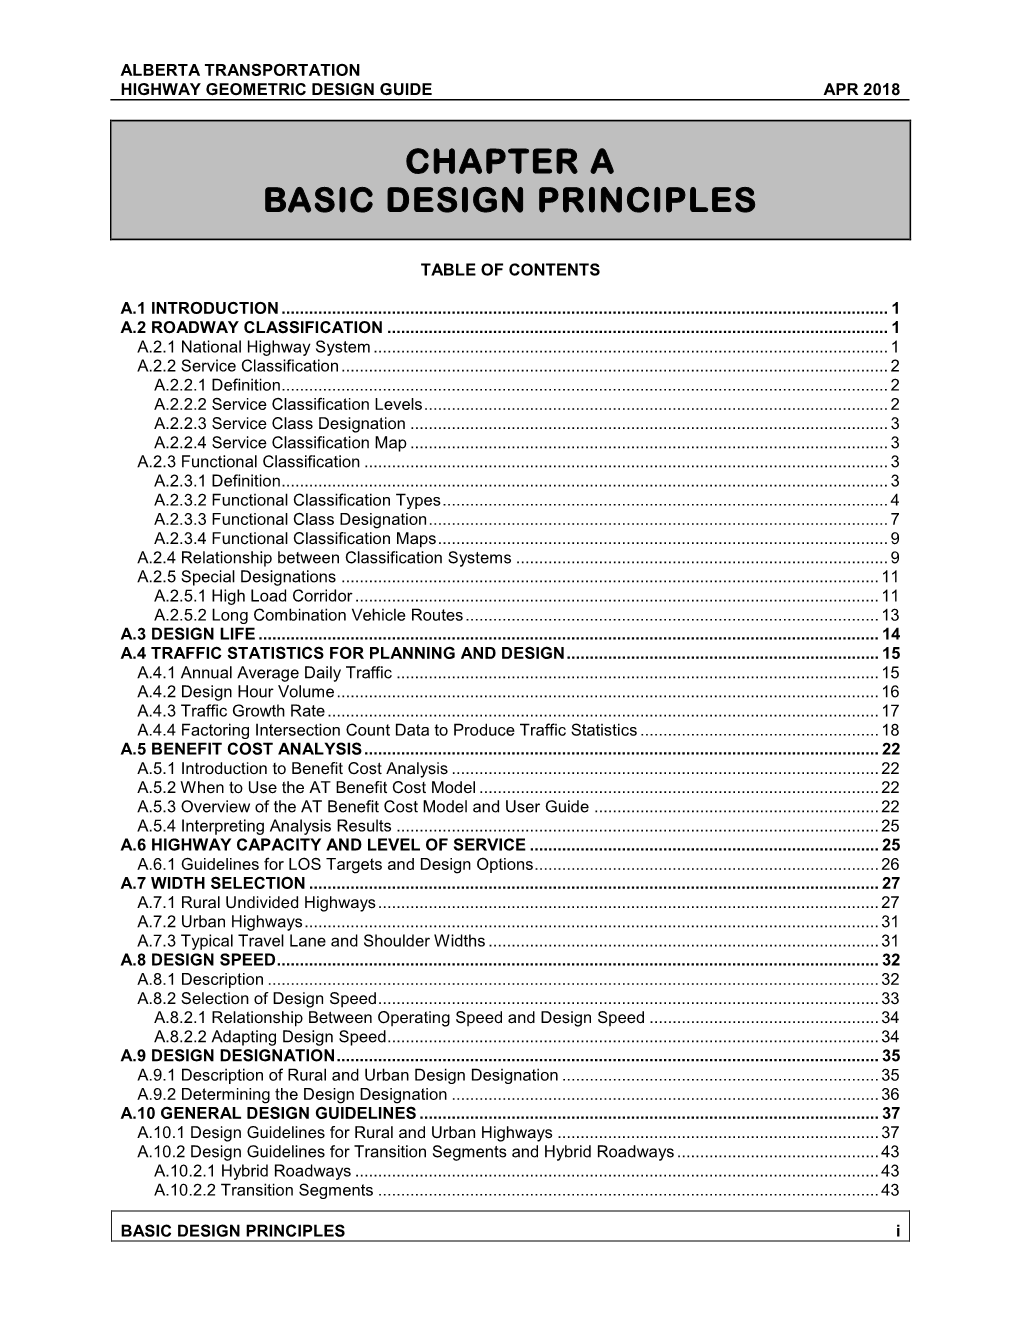 Chapter a Basic Design Principles